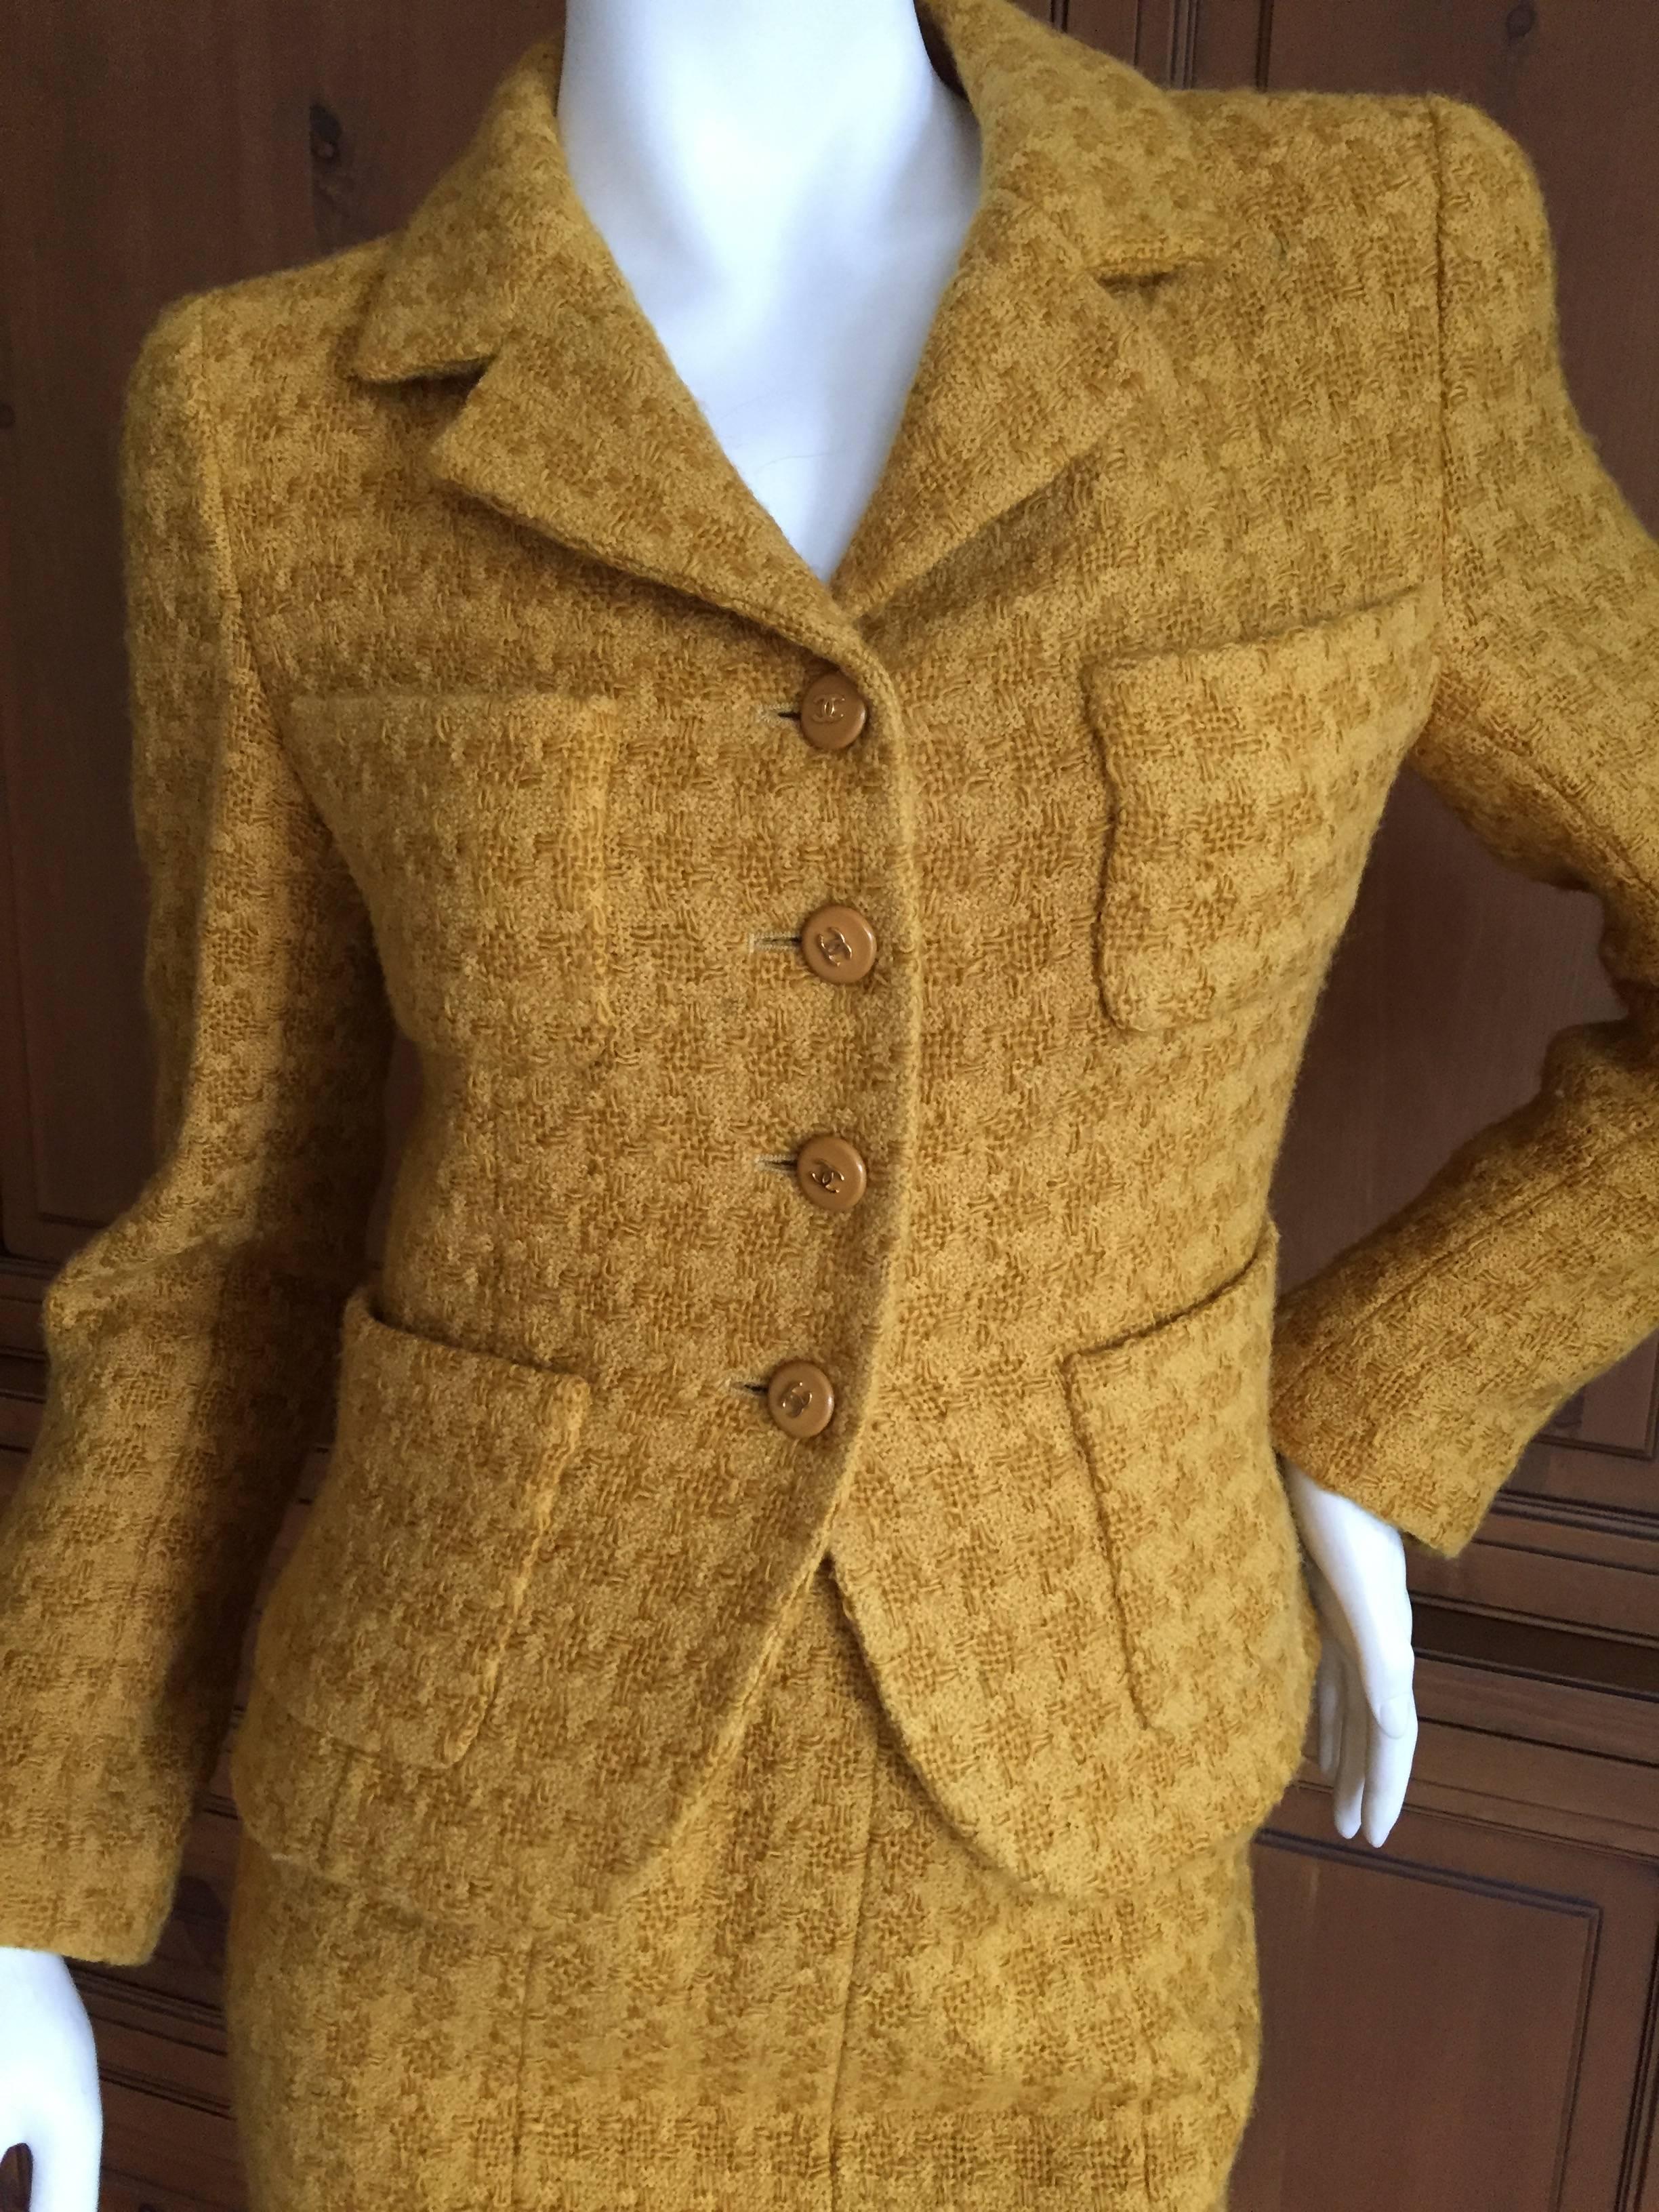 Delightful Chanel Vintage Boucle Suit from Autumn 95
 Size 34

Jacket measurements
Bust 34